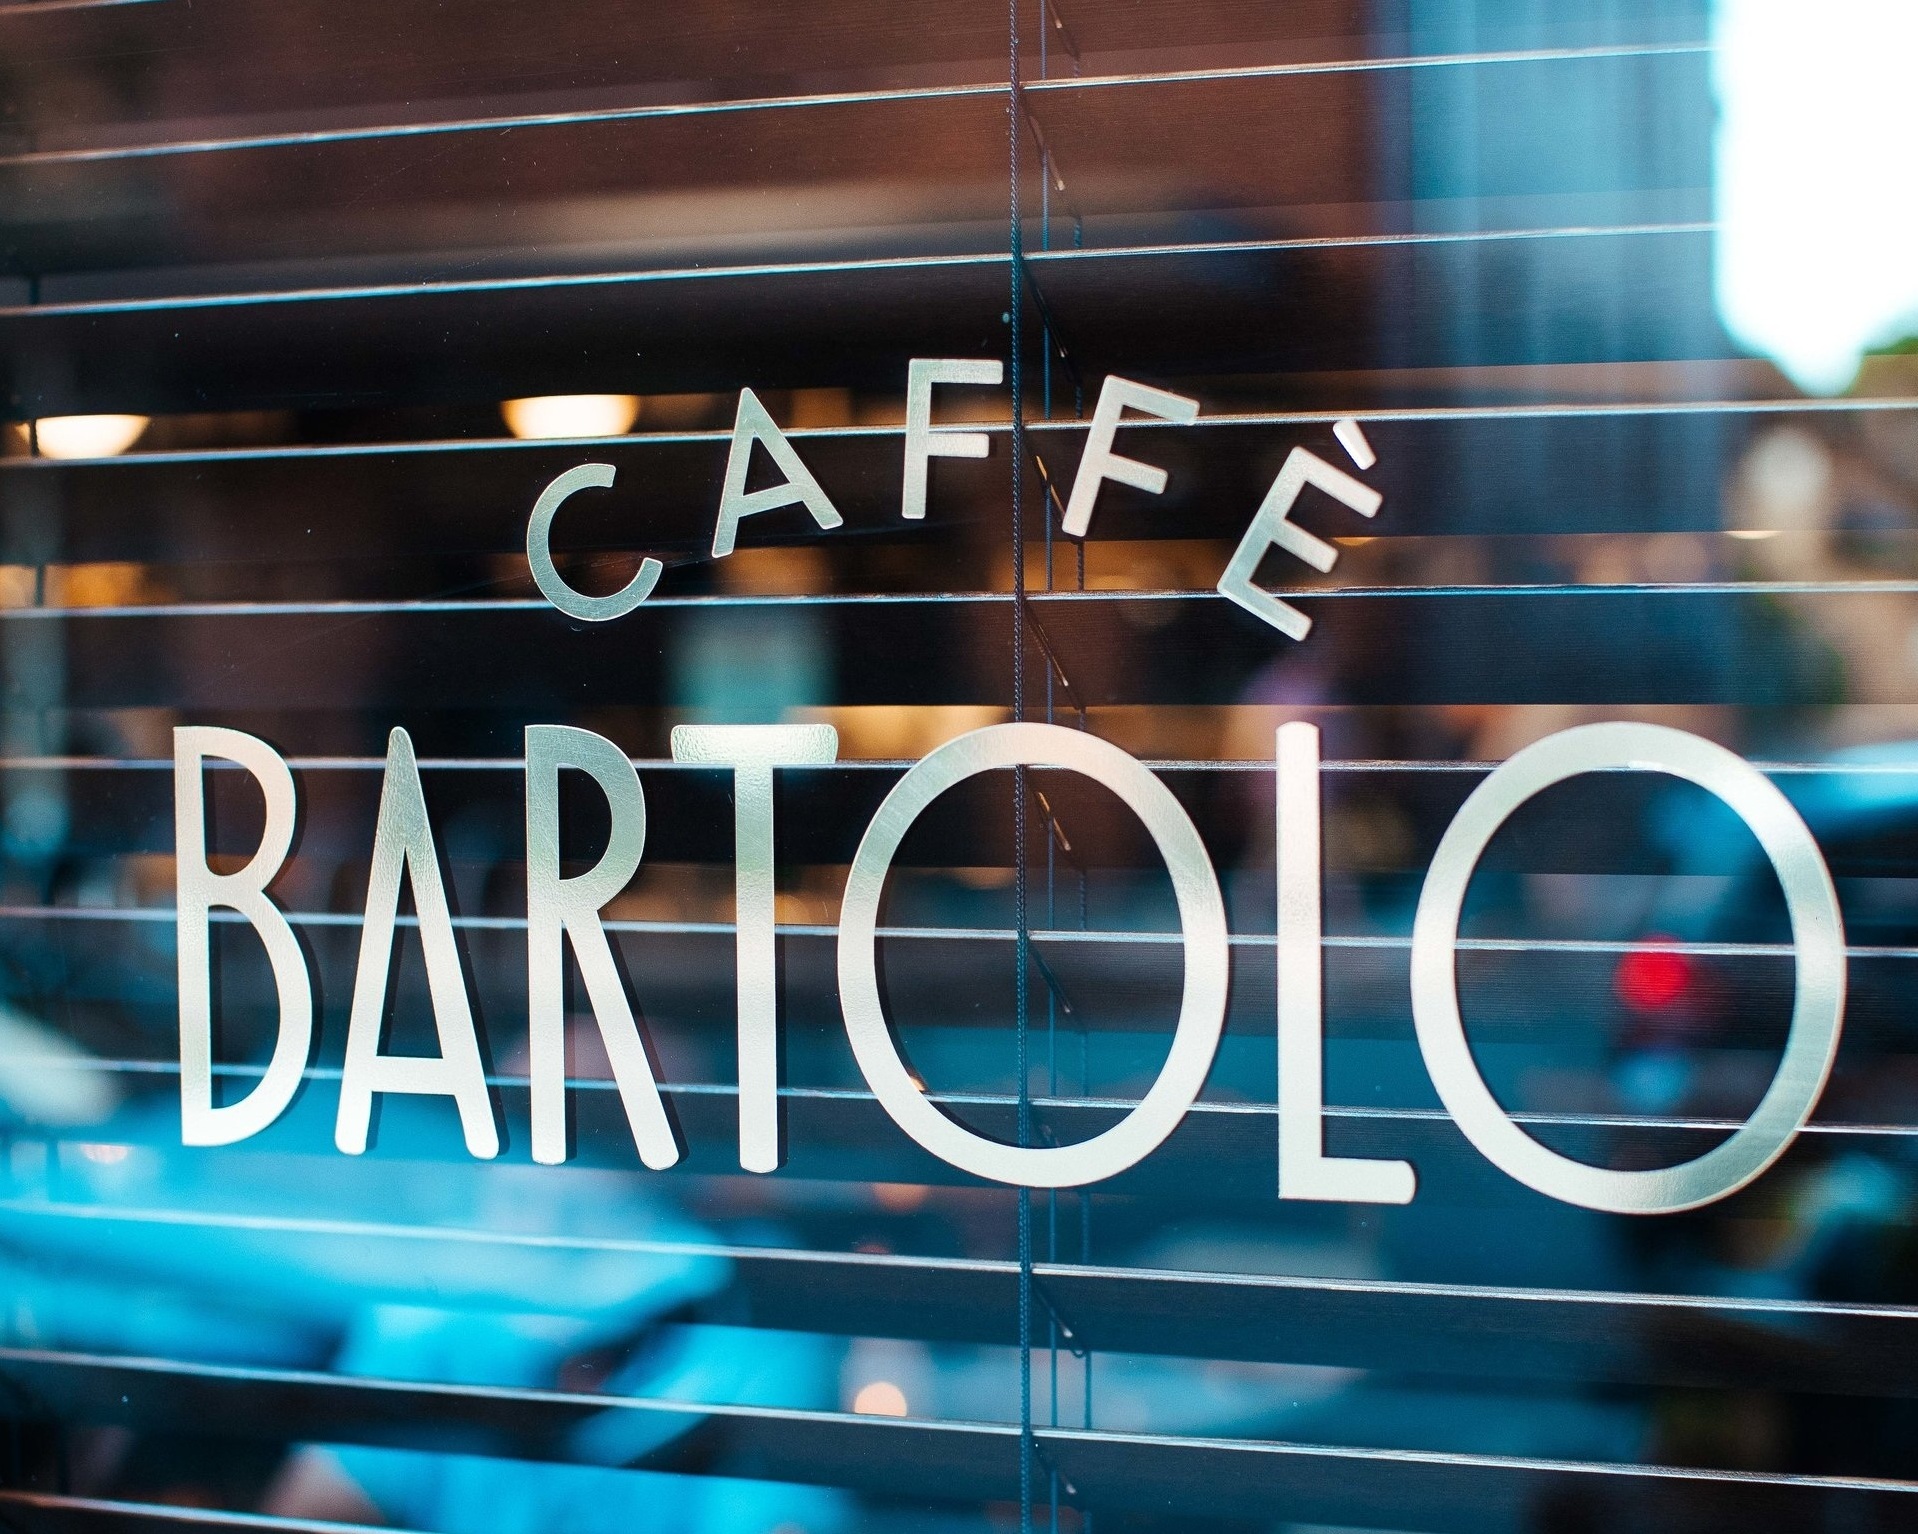 Caffe Bartolo